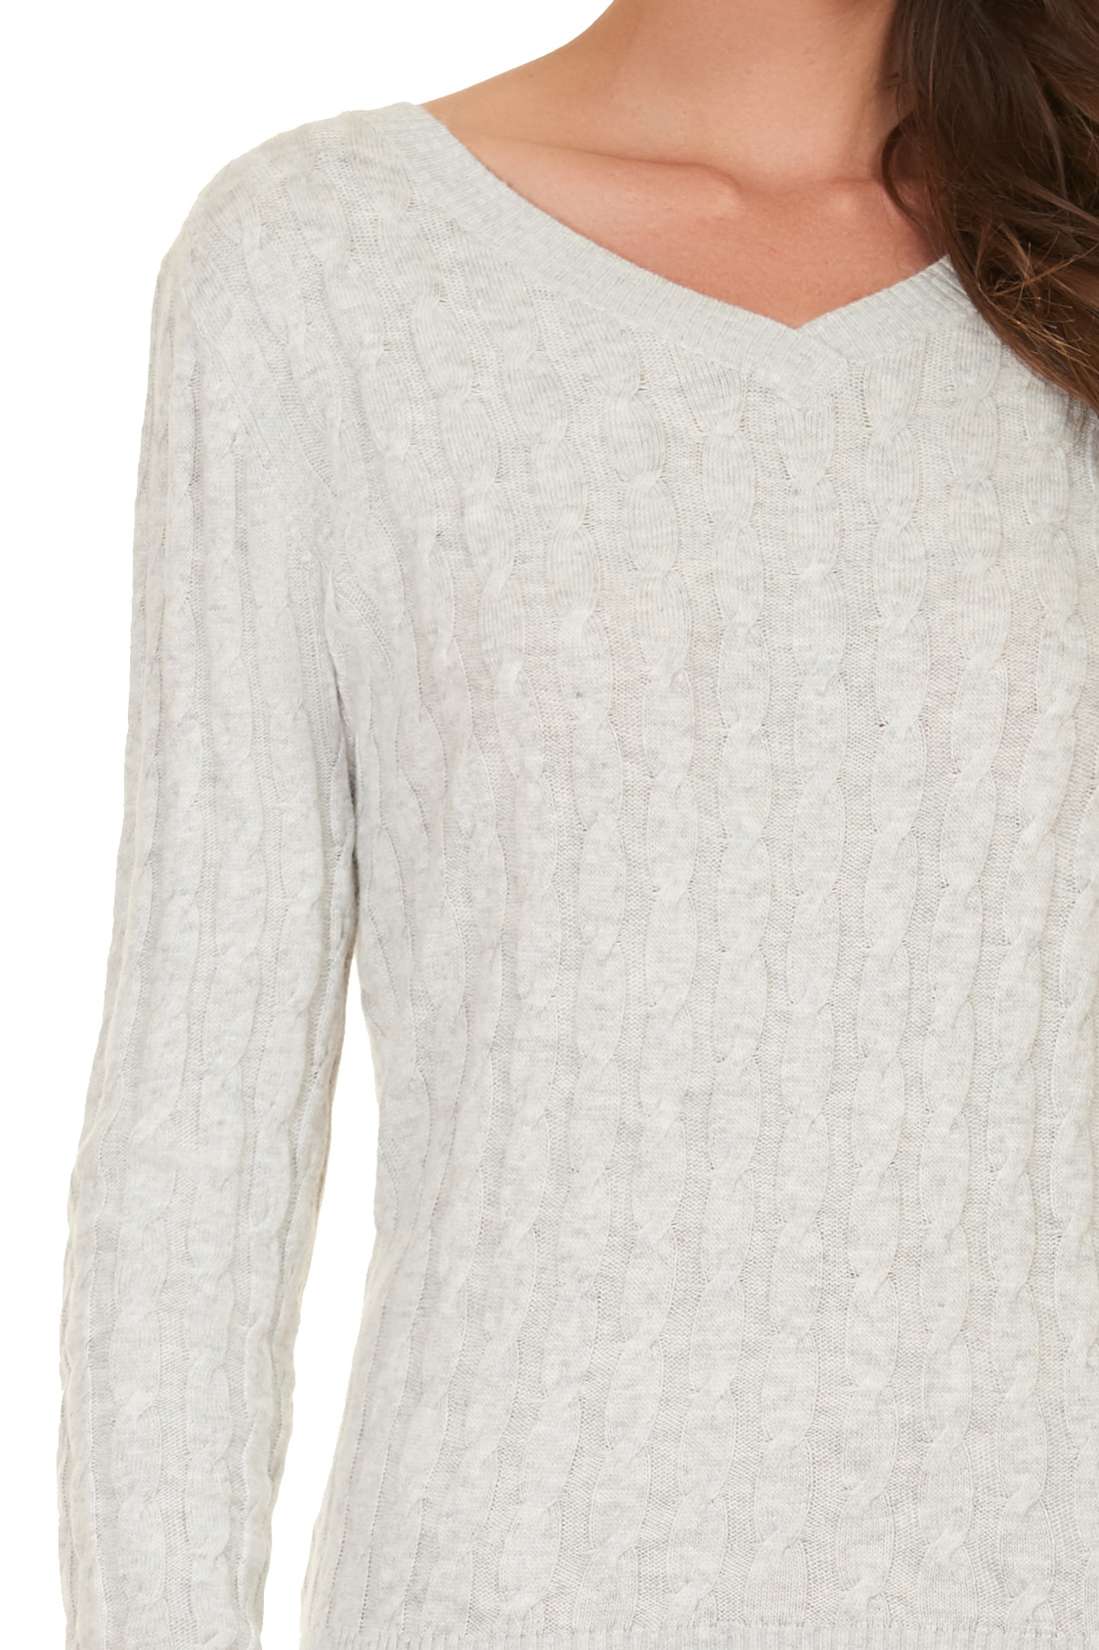 Базовый пуловер с узором и ангорой (арт. baon B137703), размер XS, цвет silver melange#серый Базовый пуловер с узором и ангорой (арт. baon B137703) - фото 4